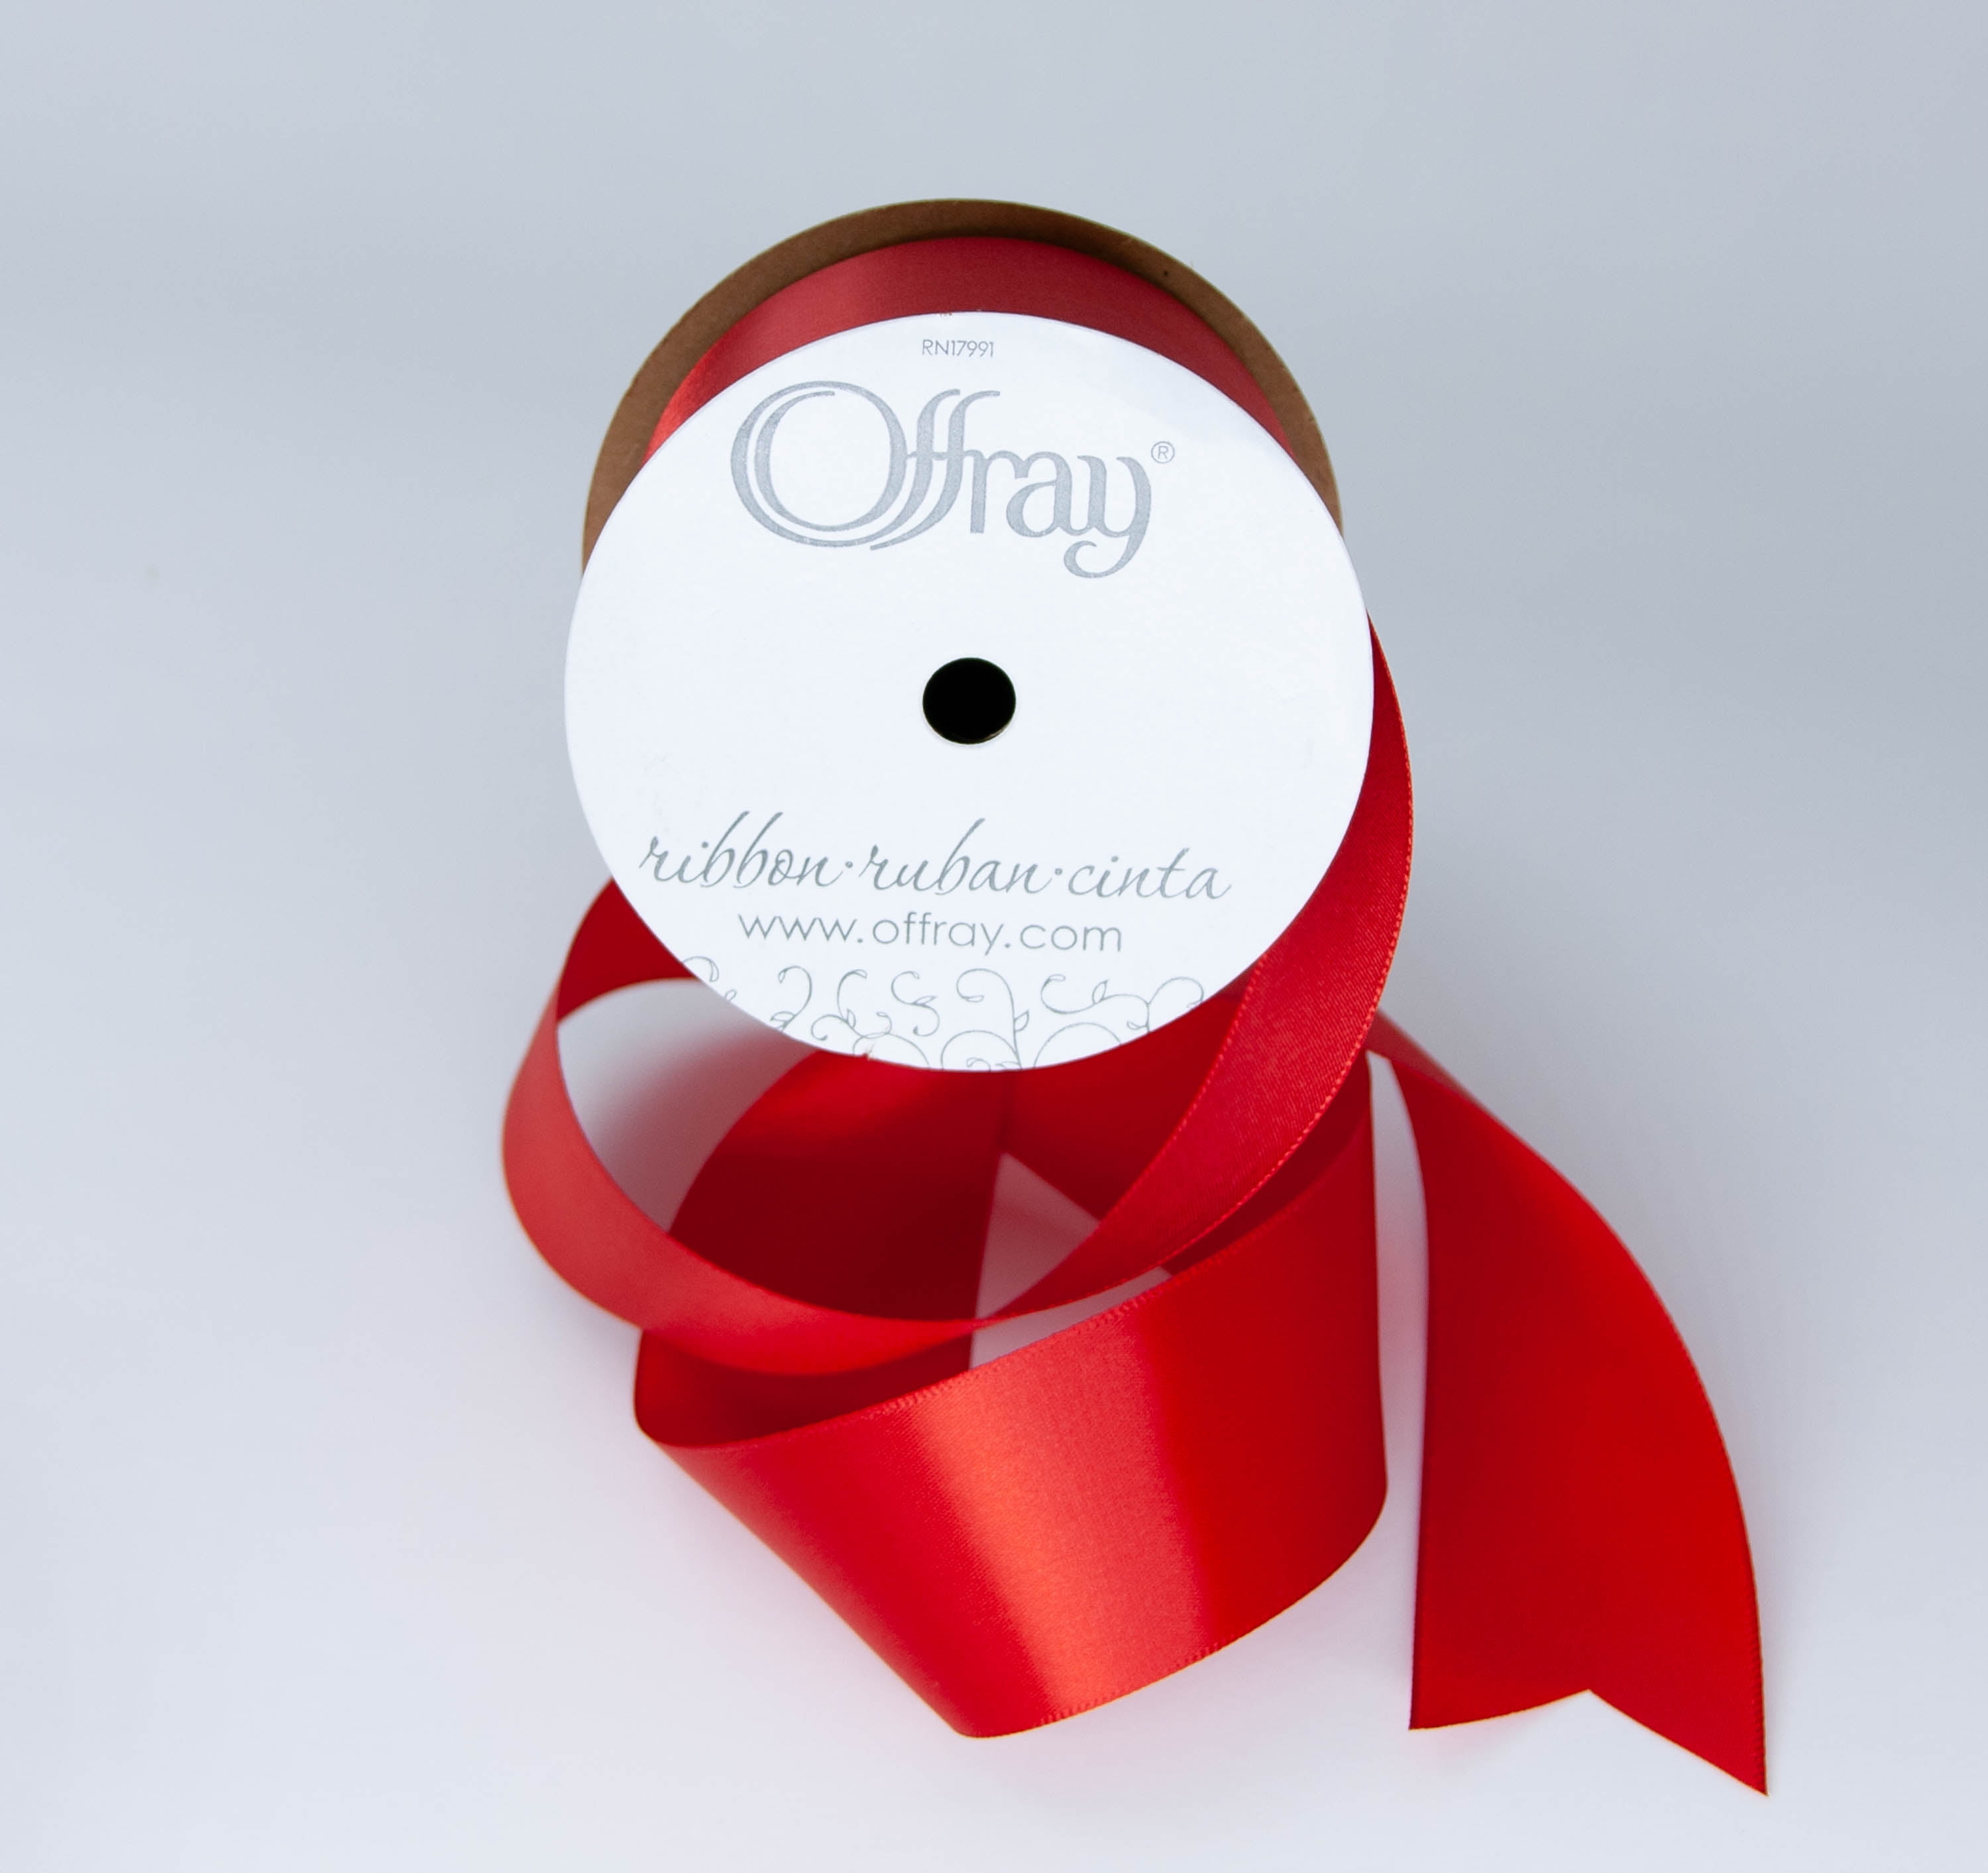 Offray Ribbon, Red 1 1/2 inch Single Face Satin Polyester Ribbon